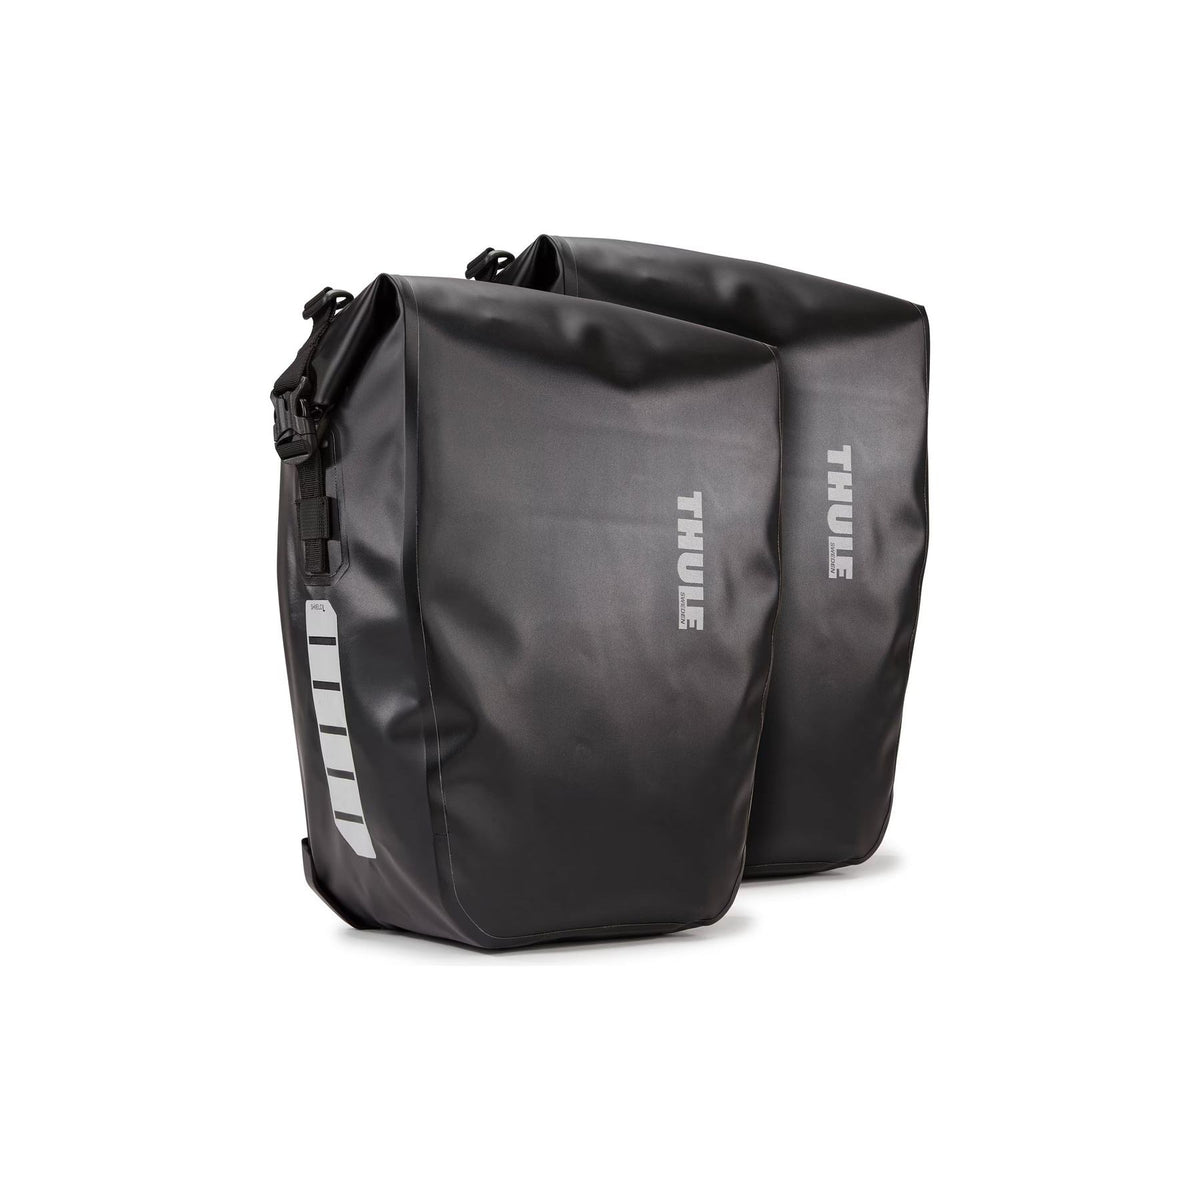 Thule Shield Pannier Bag